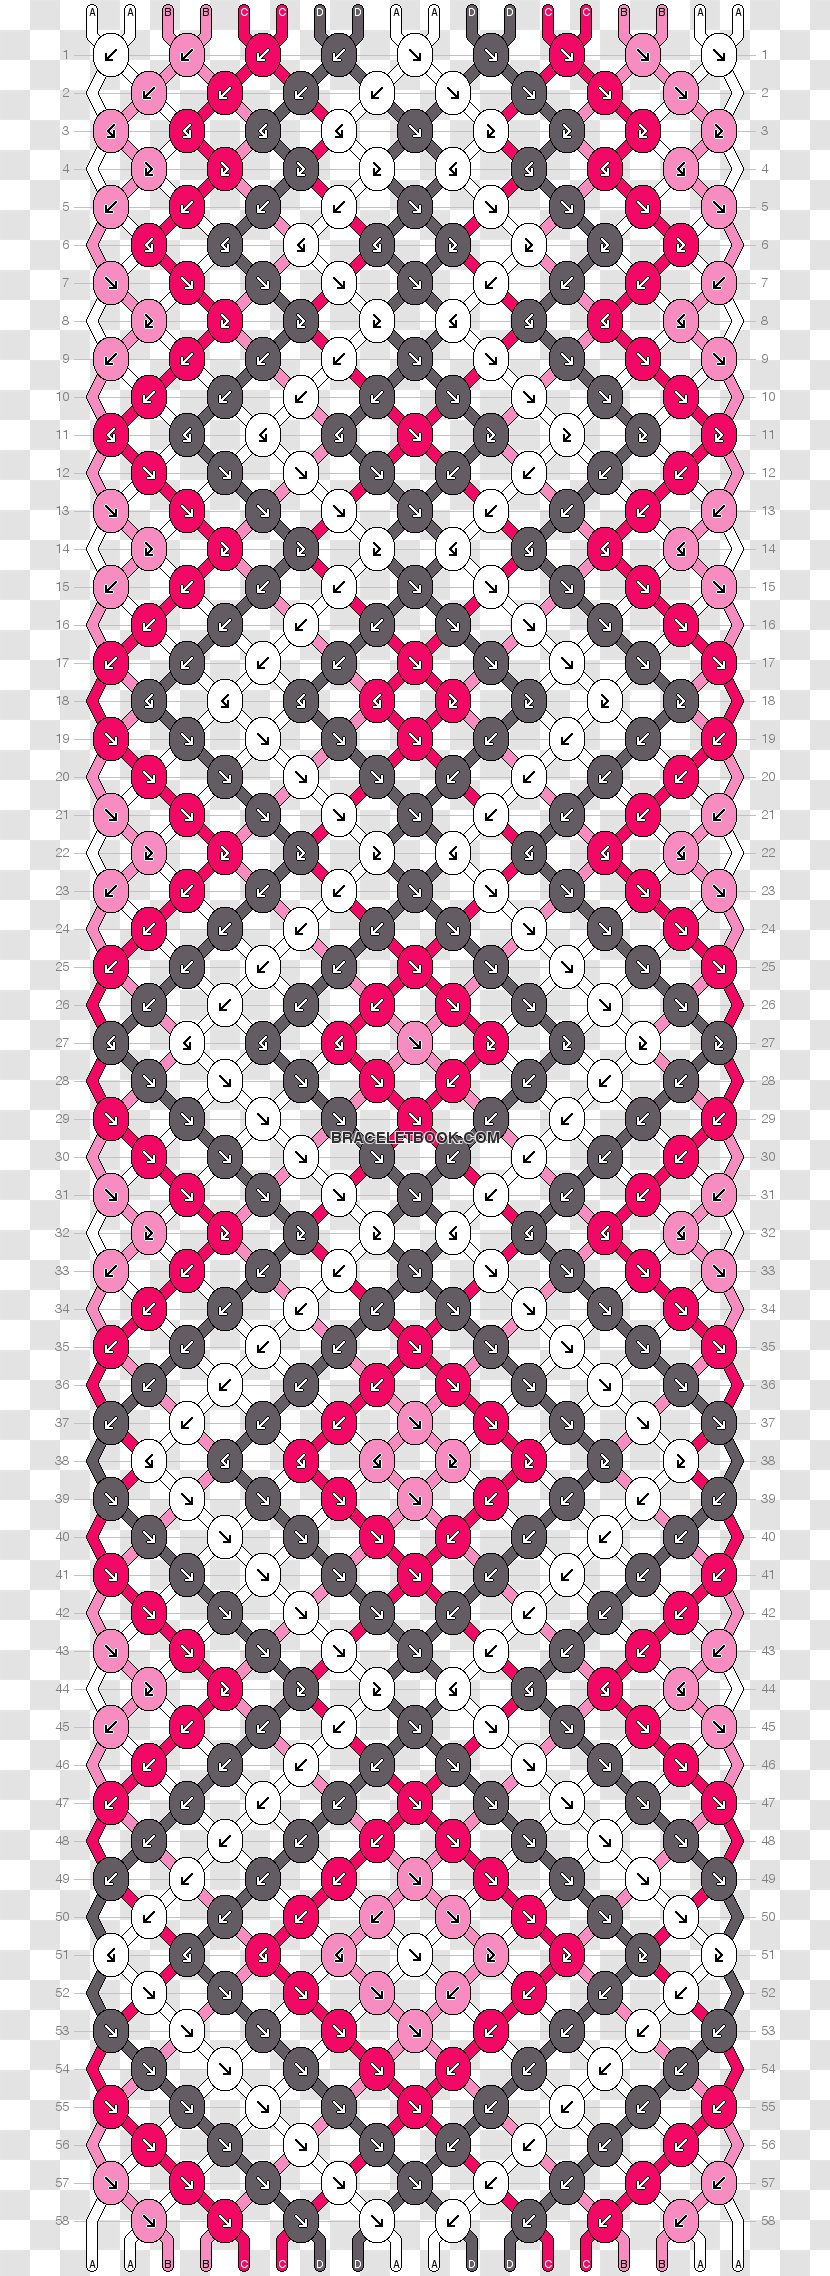 Friendship Bracelet Dress Pattern - Chevron - Polka Dot Transparent PNG